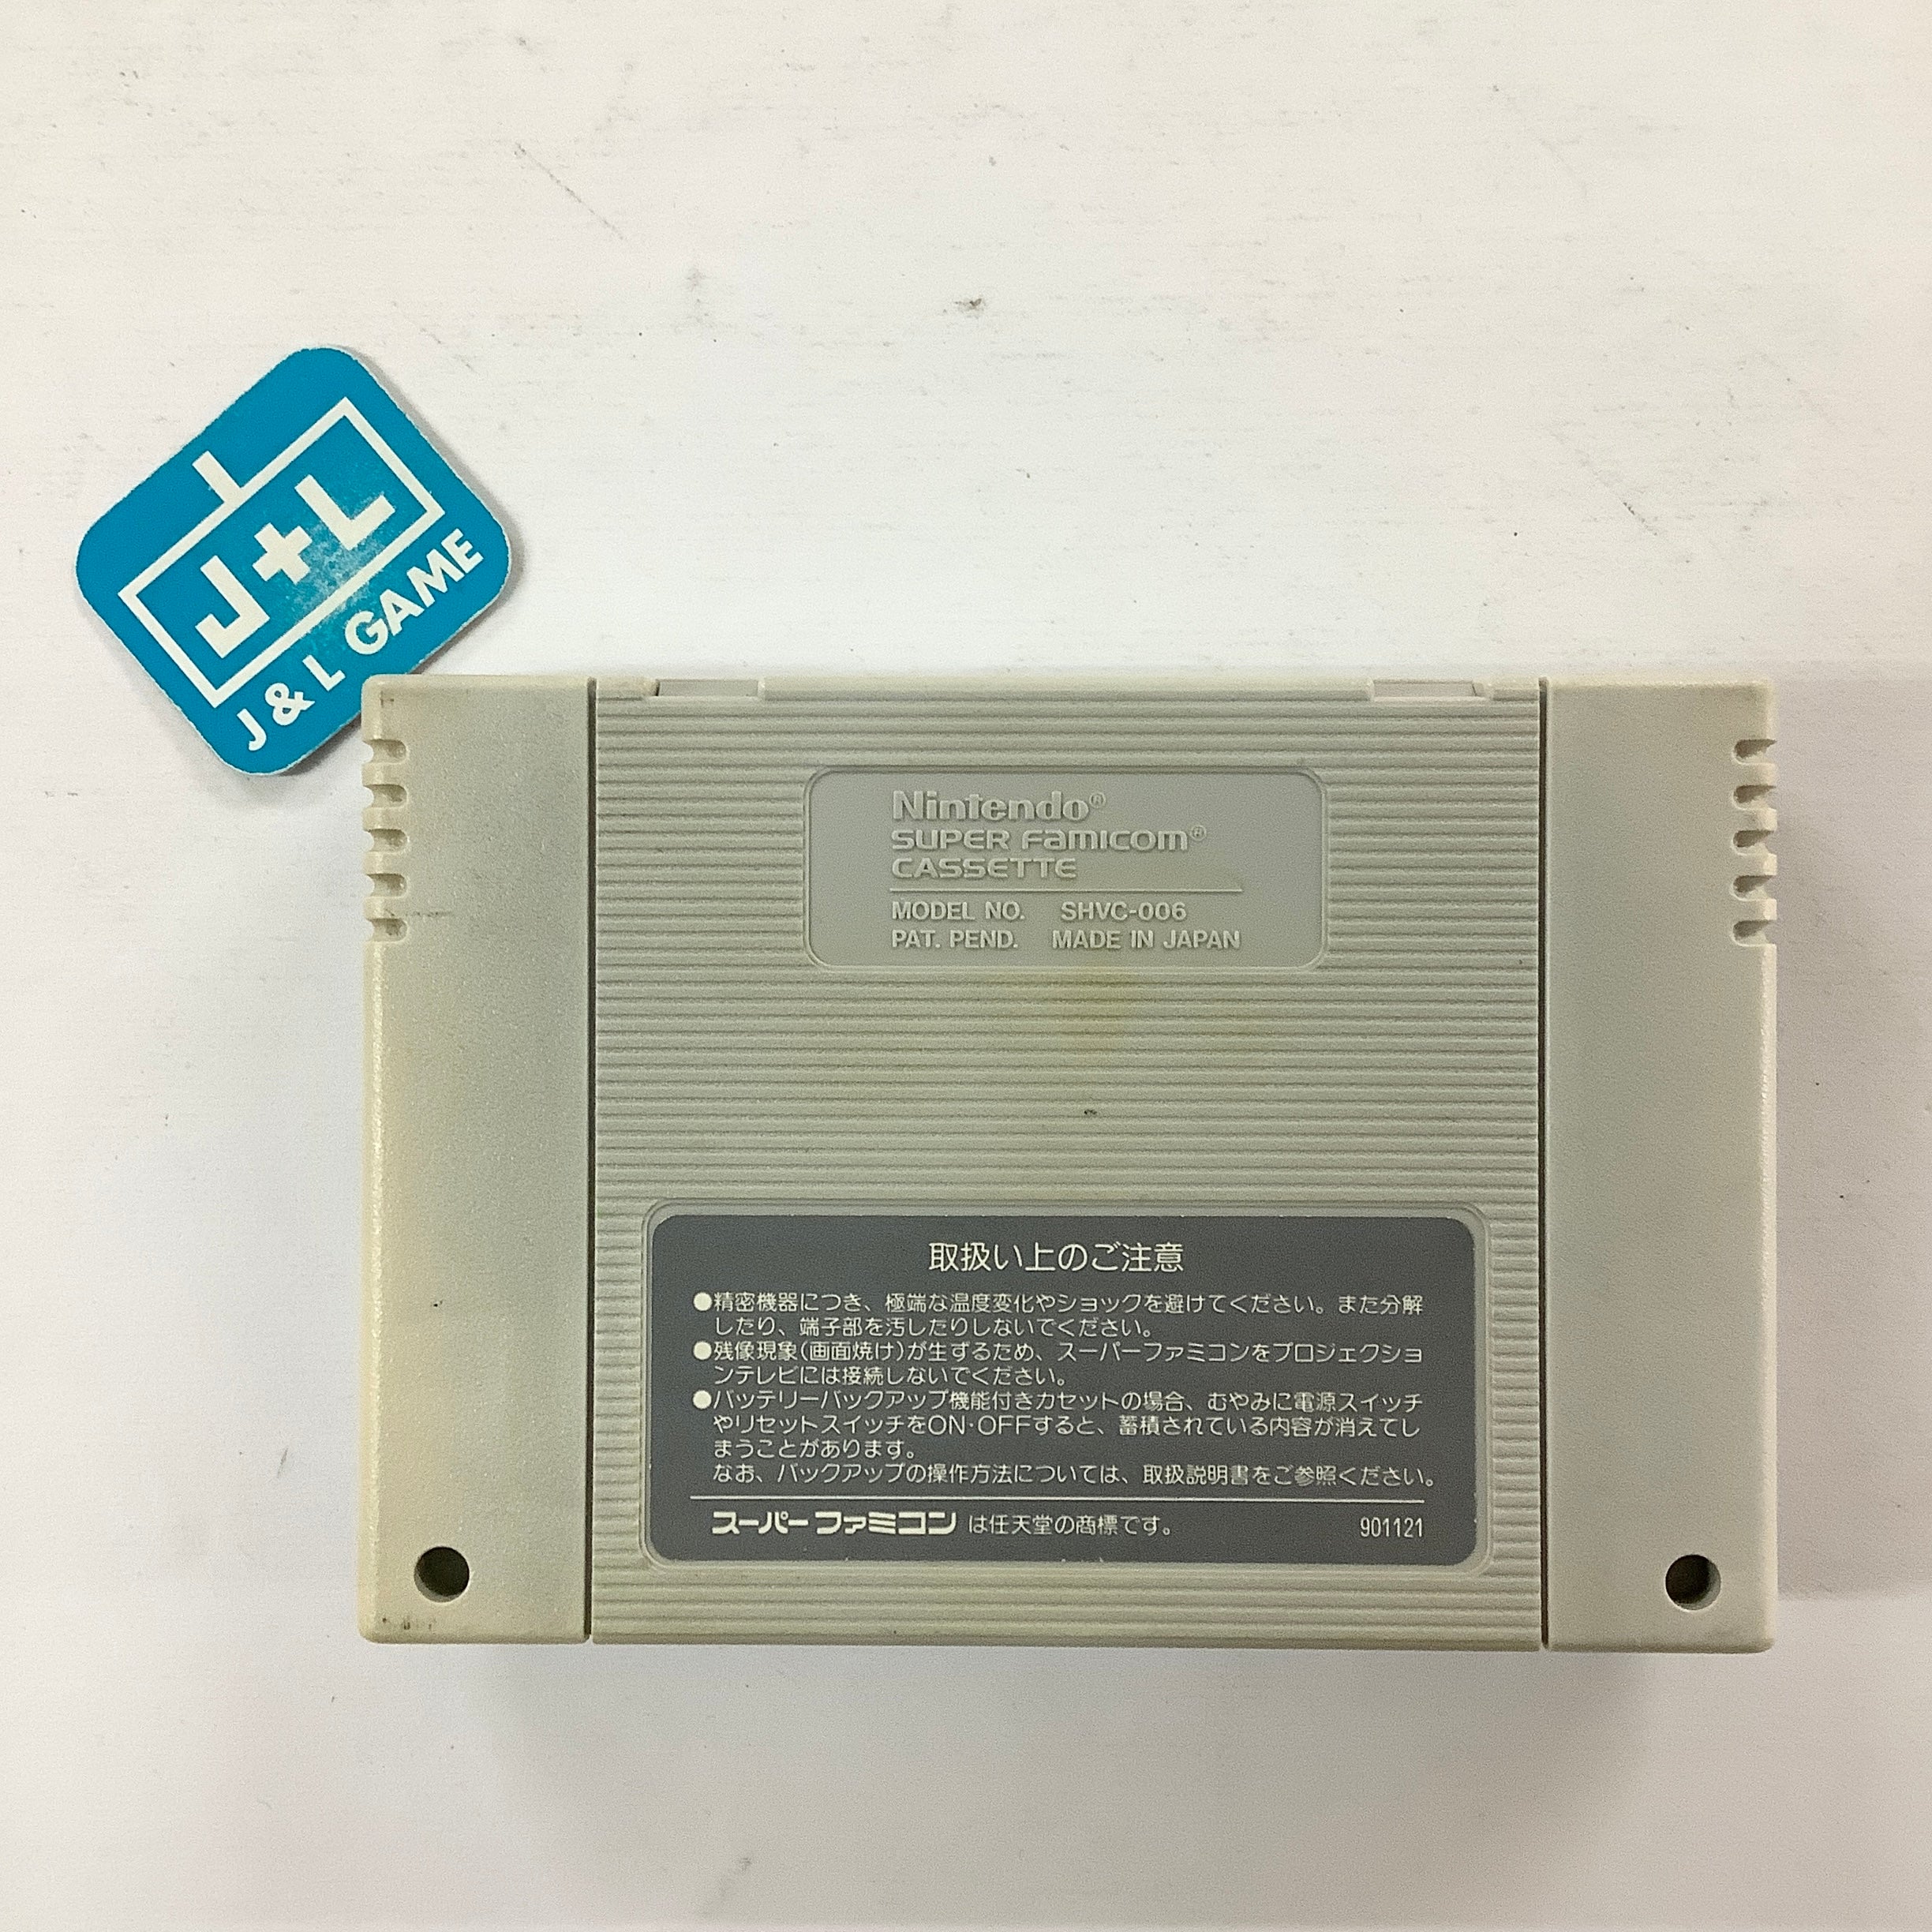 Honke Sankyo Fever Jikki Simulation - (SFC) Super Famicom [Pre-Owned] (Japanese Import) Video Games Den'Z   